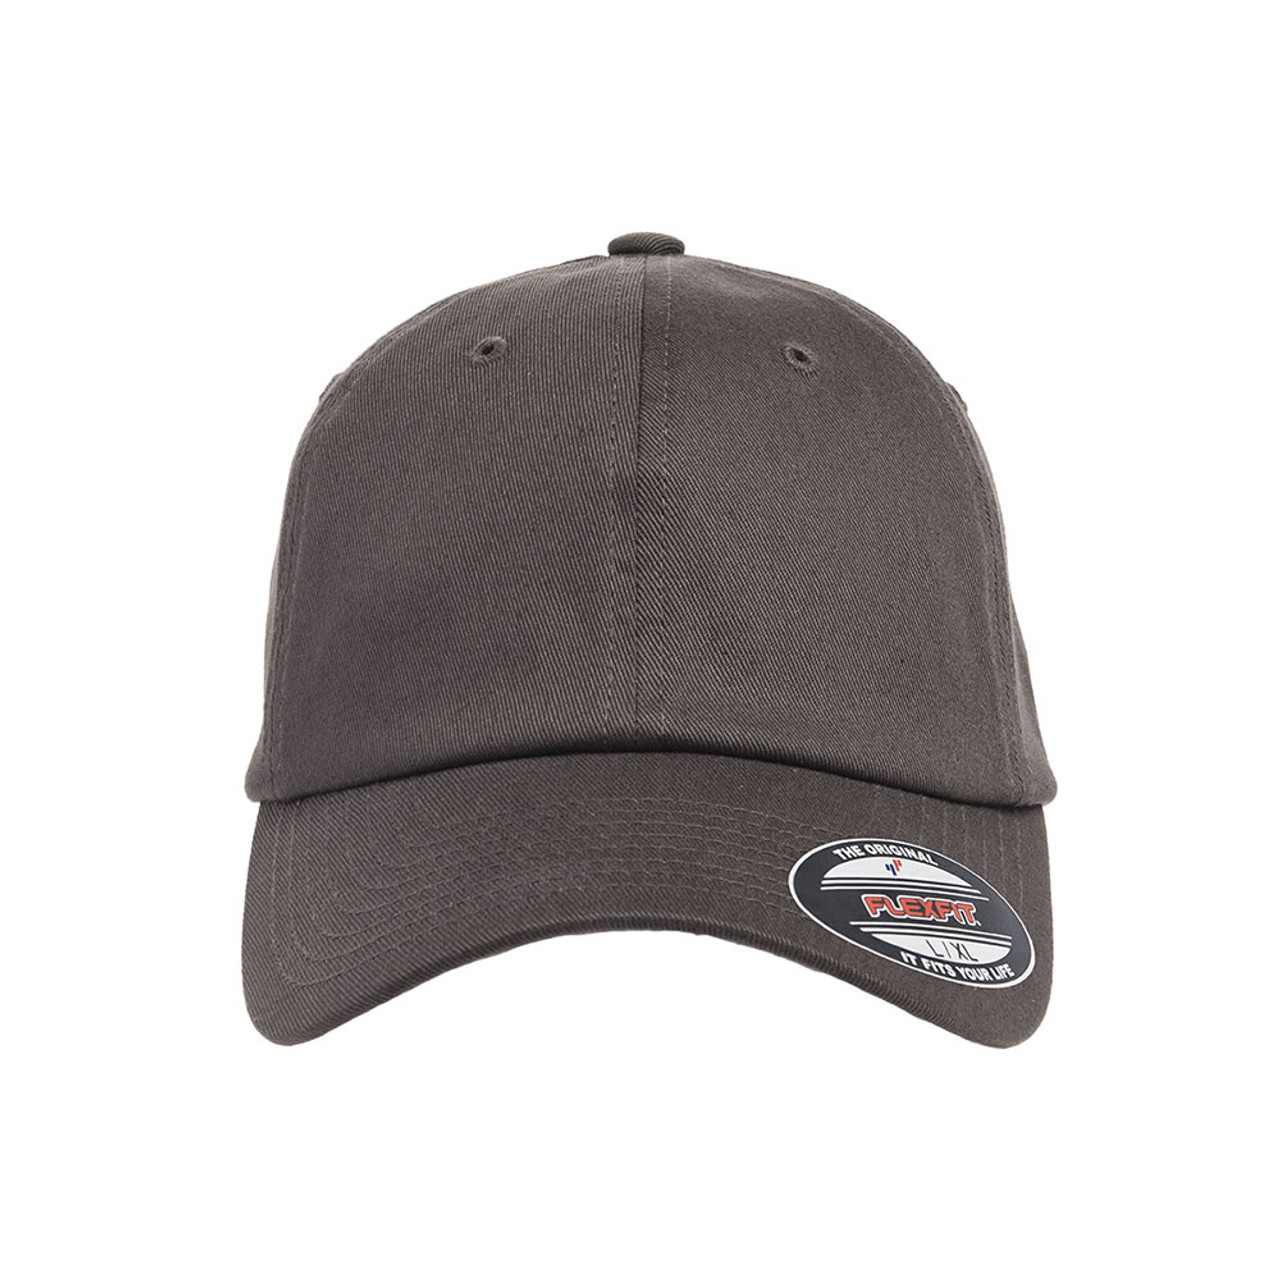 Flexfit Cotton Twill Dad Jac | The Cap - Dozen One Hat